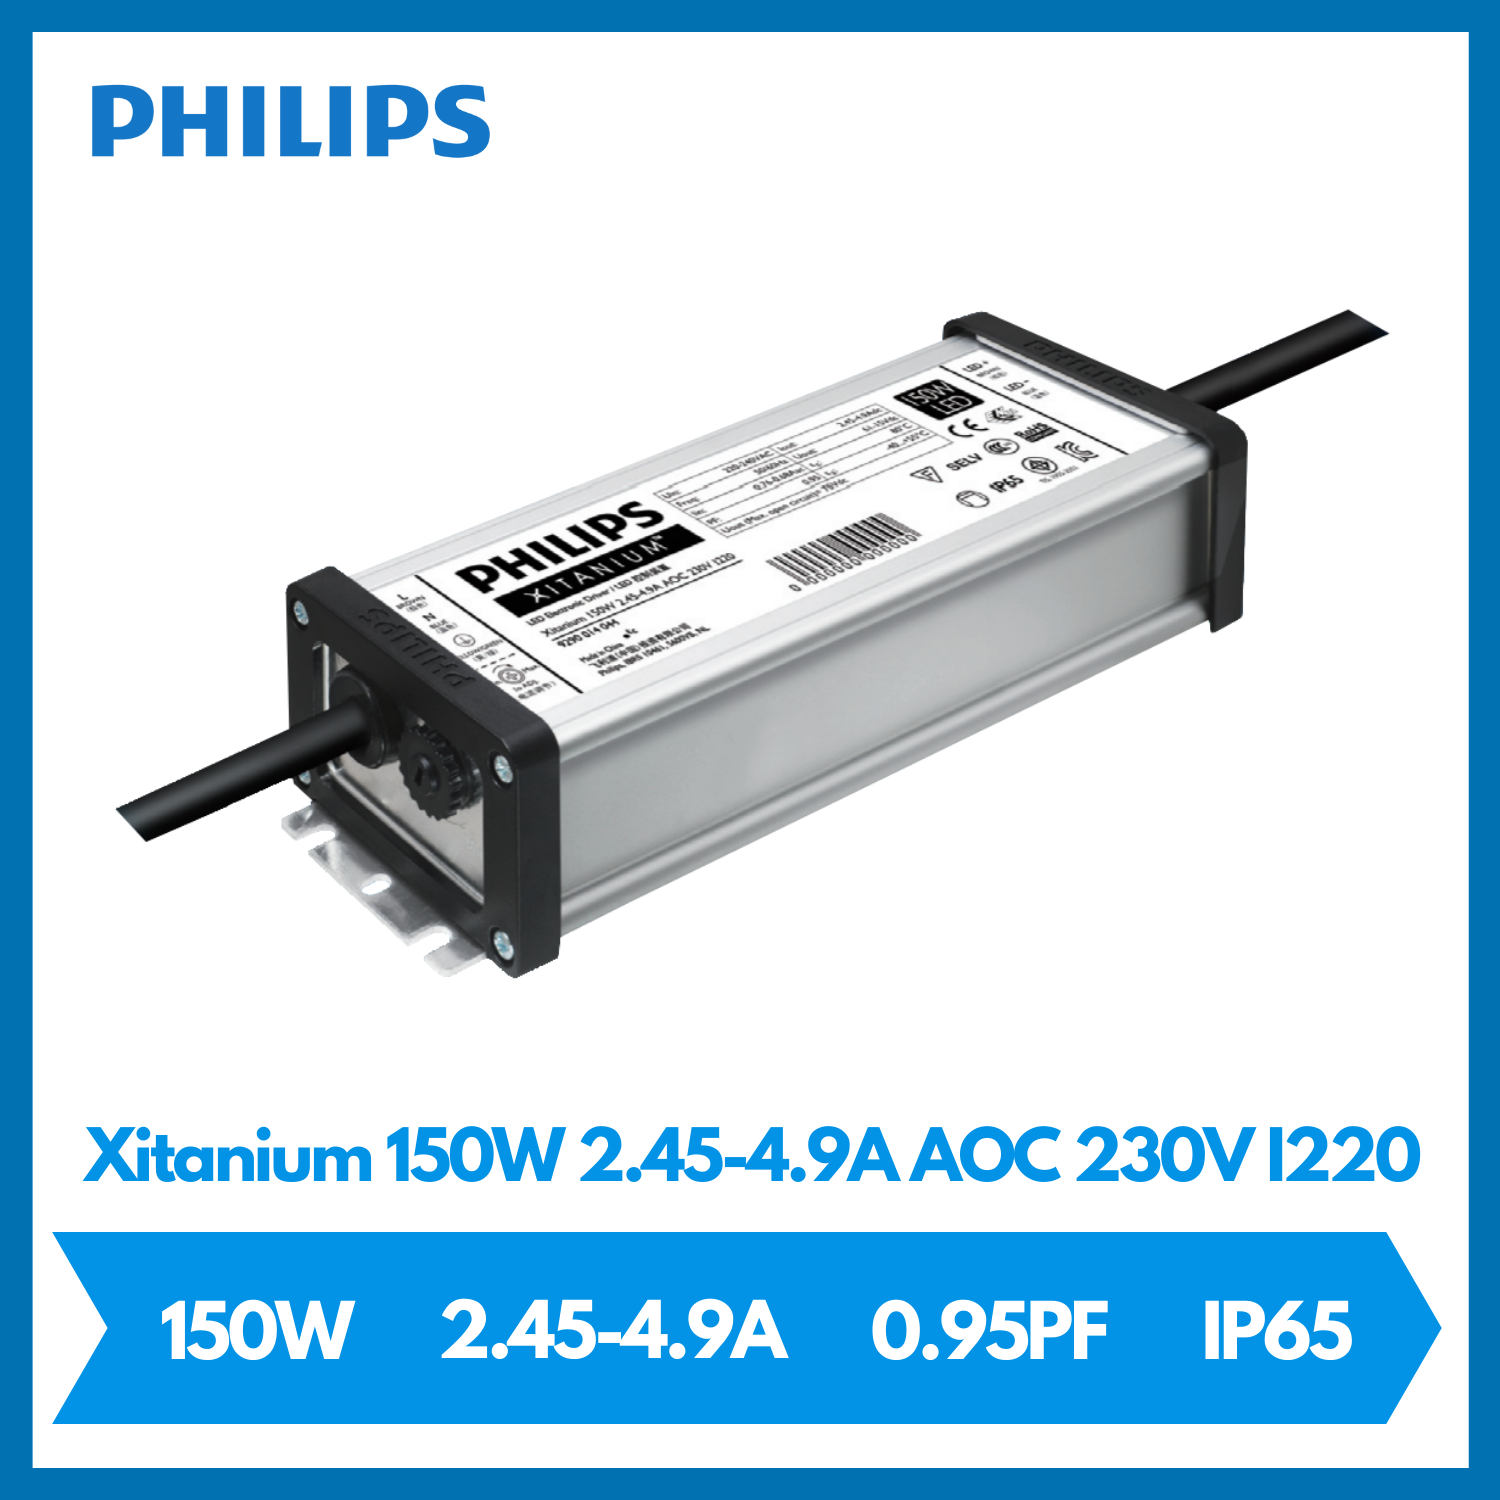 PHILIPS Xitanium 150W 2.45-4.9A AOC 230V I220